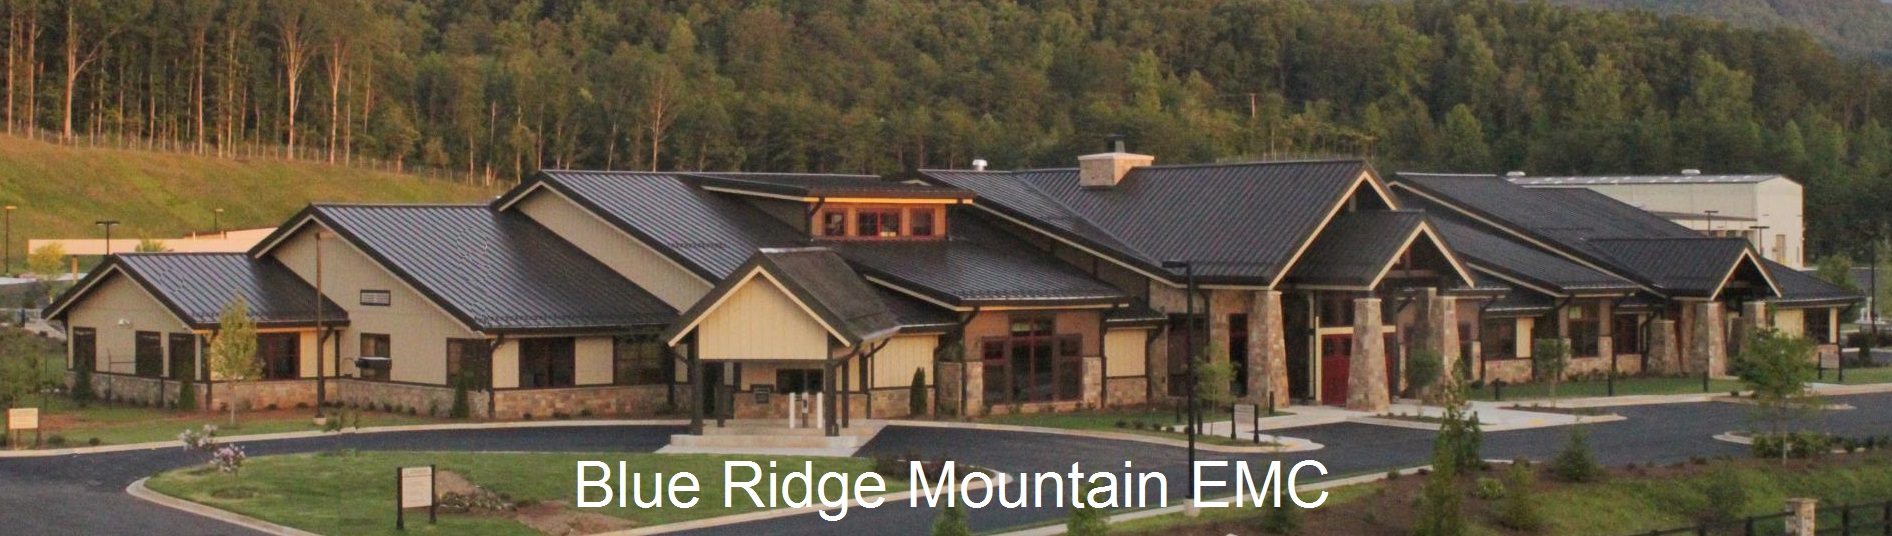 Blue Ridge Mountain EMC Young Harris Office location on Google maps